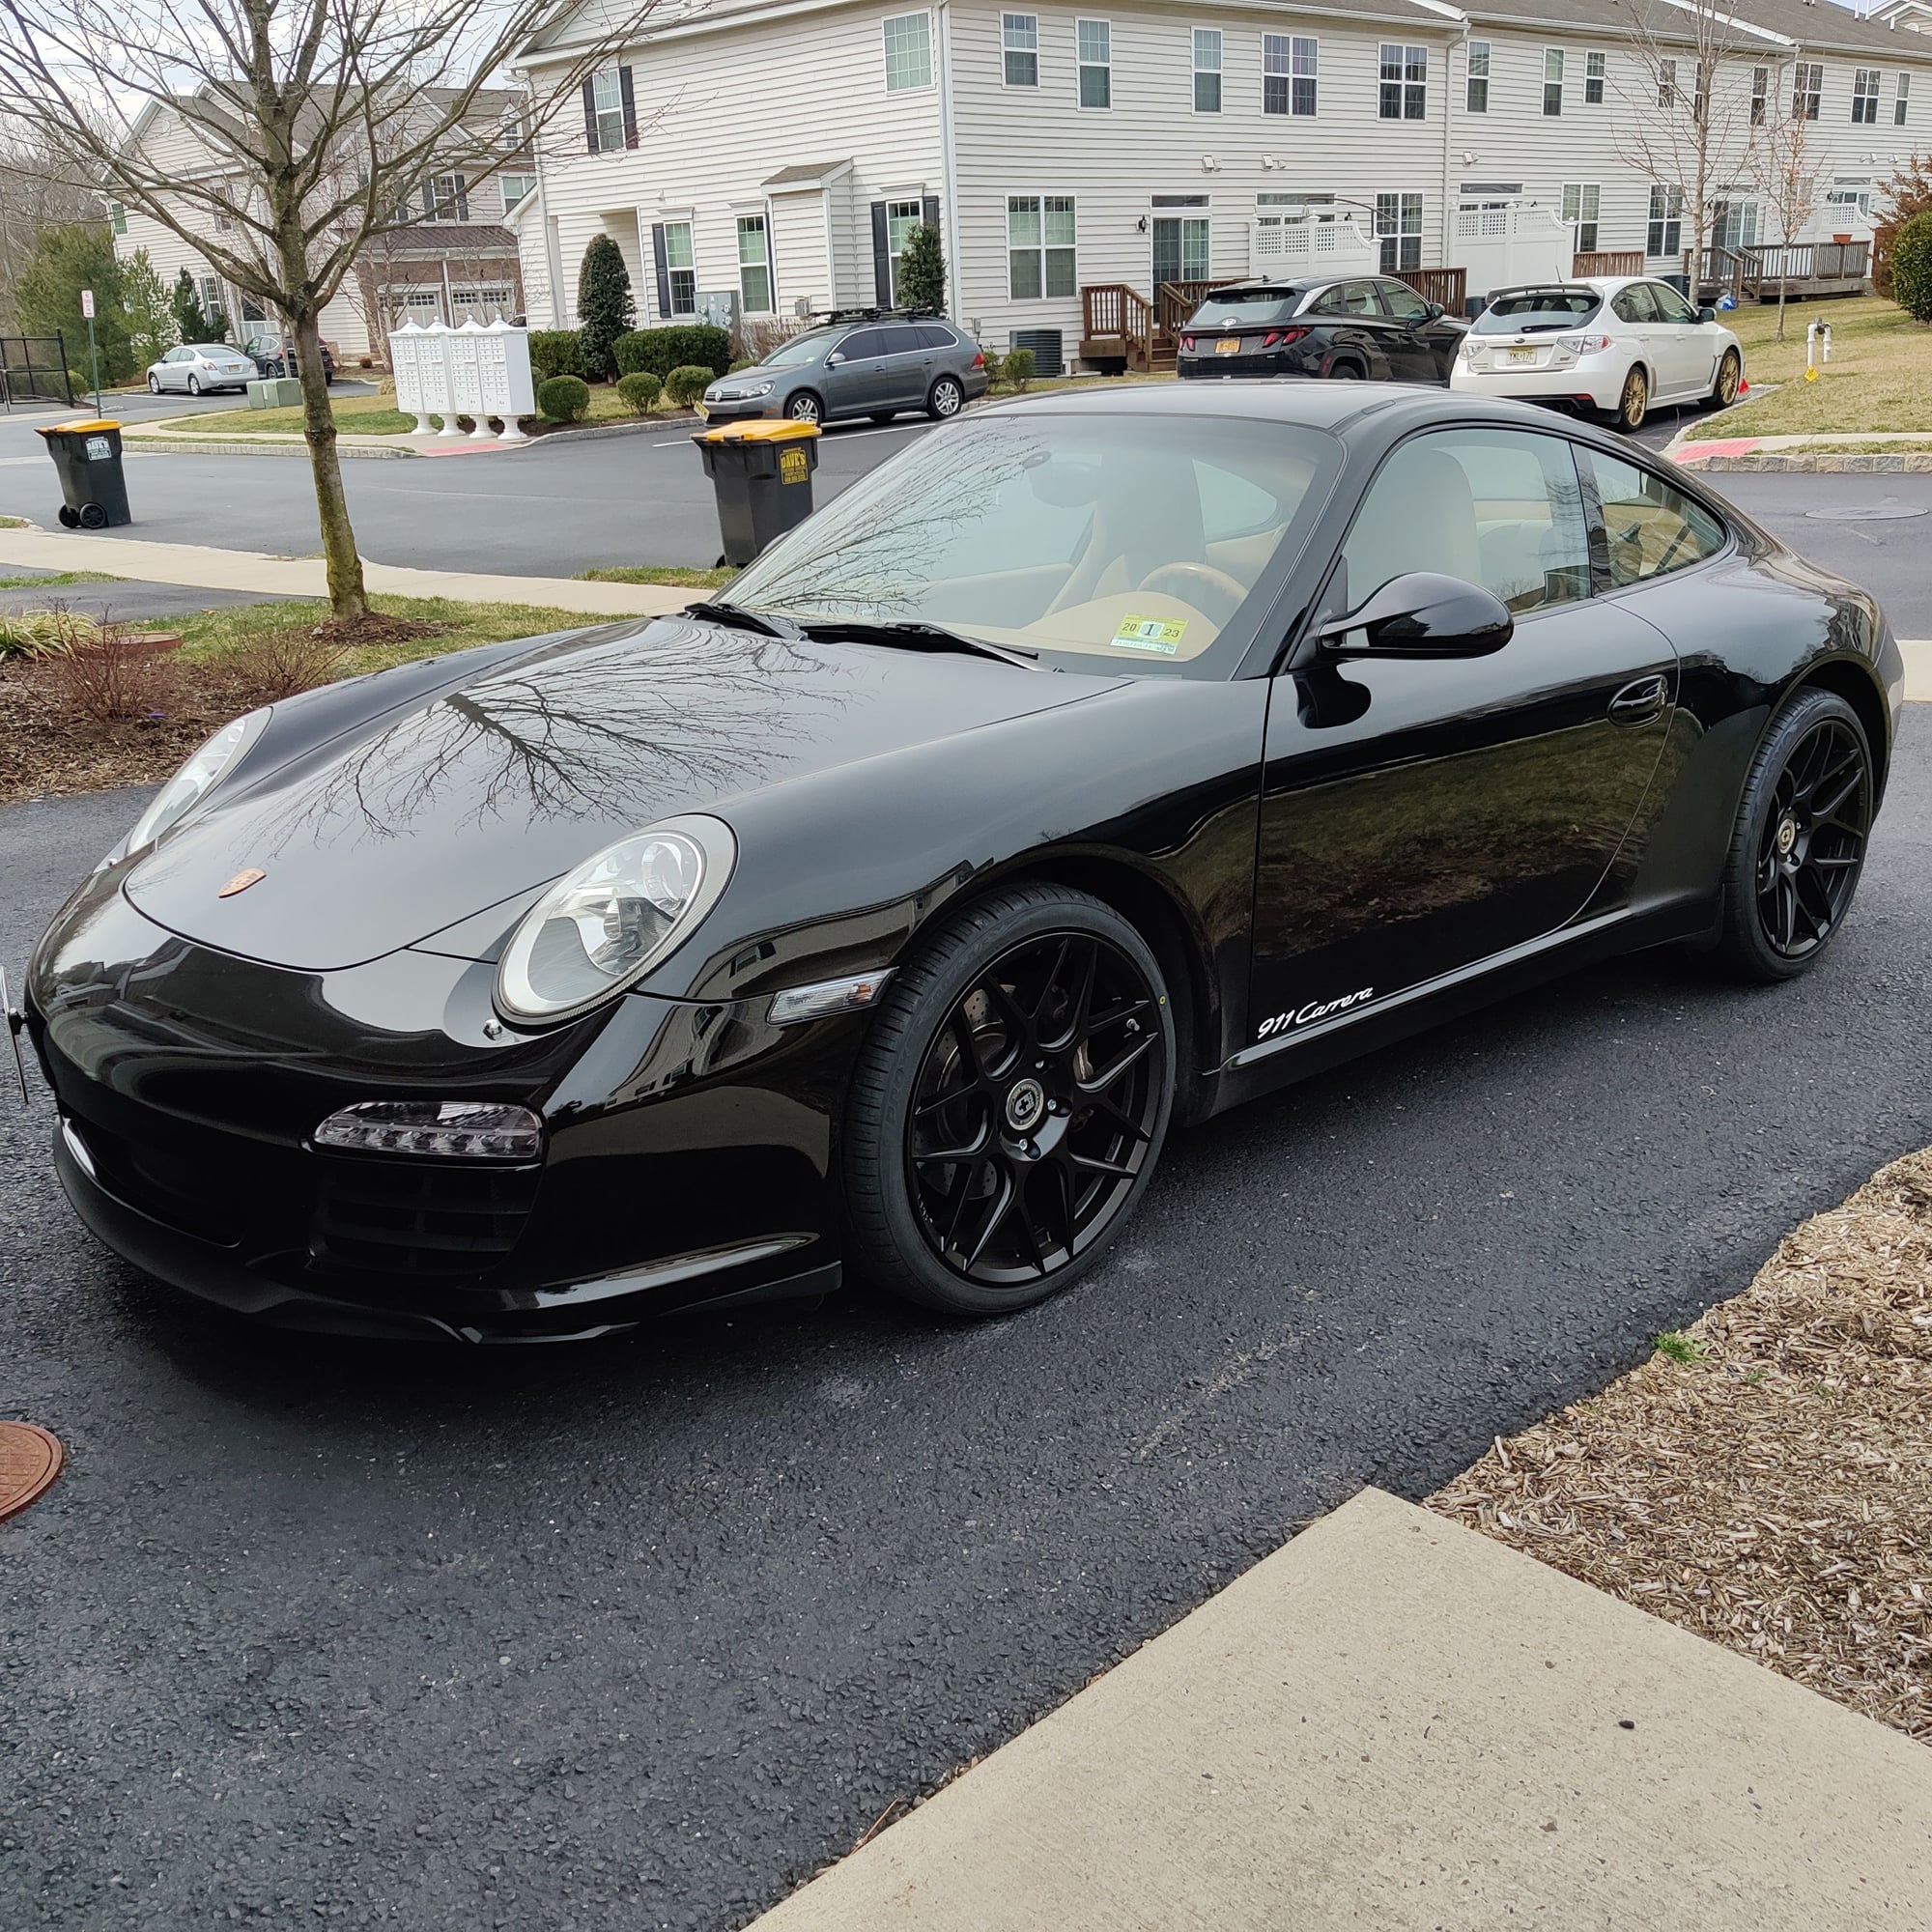 2009 Porsche 911 - 2009 997.2 Carrera (manual) - Used - VIN WP0AA29909S706384 - 135,000 Miles - 6 cyl - 2WD - Manual - Coupe - Black - Princeton, NJ 08544, United States